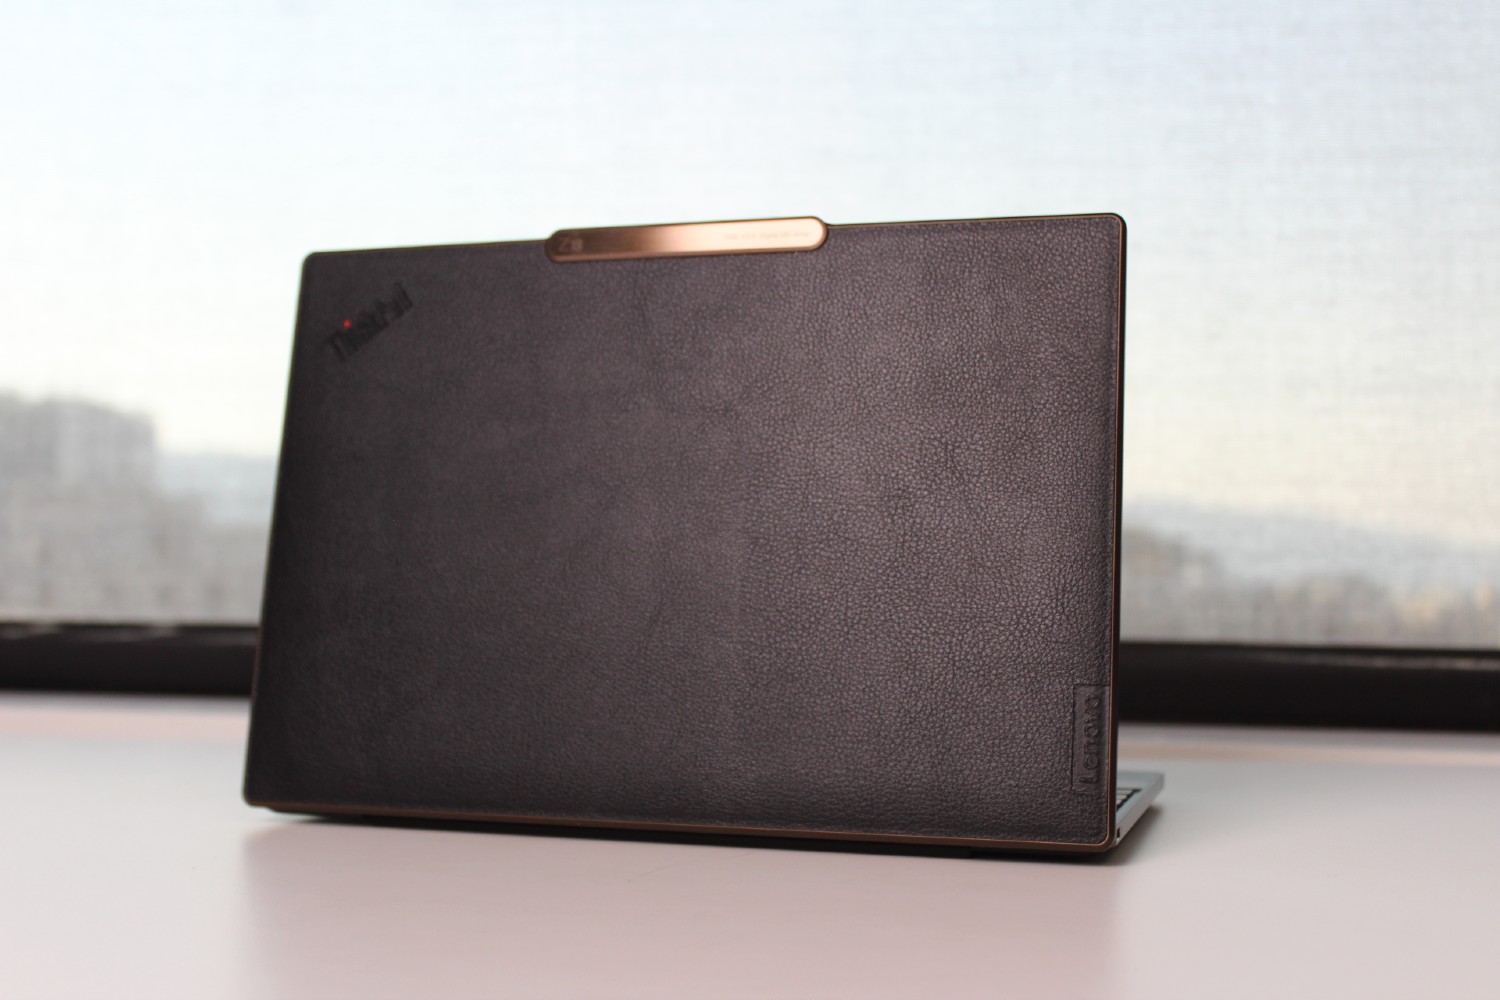 Lenovo ThinkPad Z13 review: the ThinkPad, evolved | Digital Trends